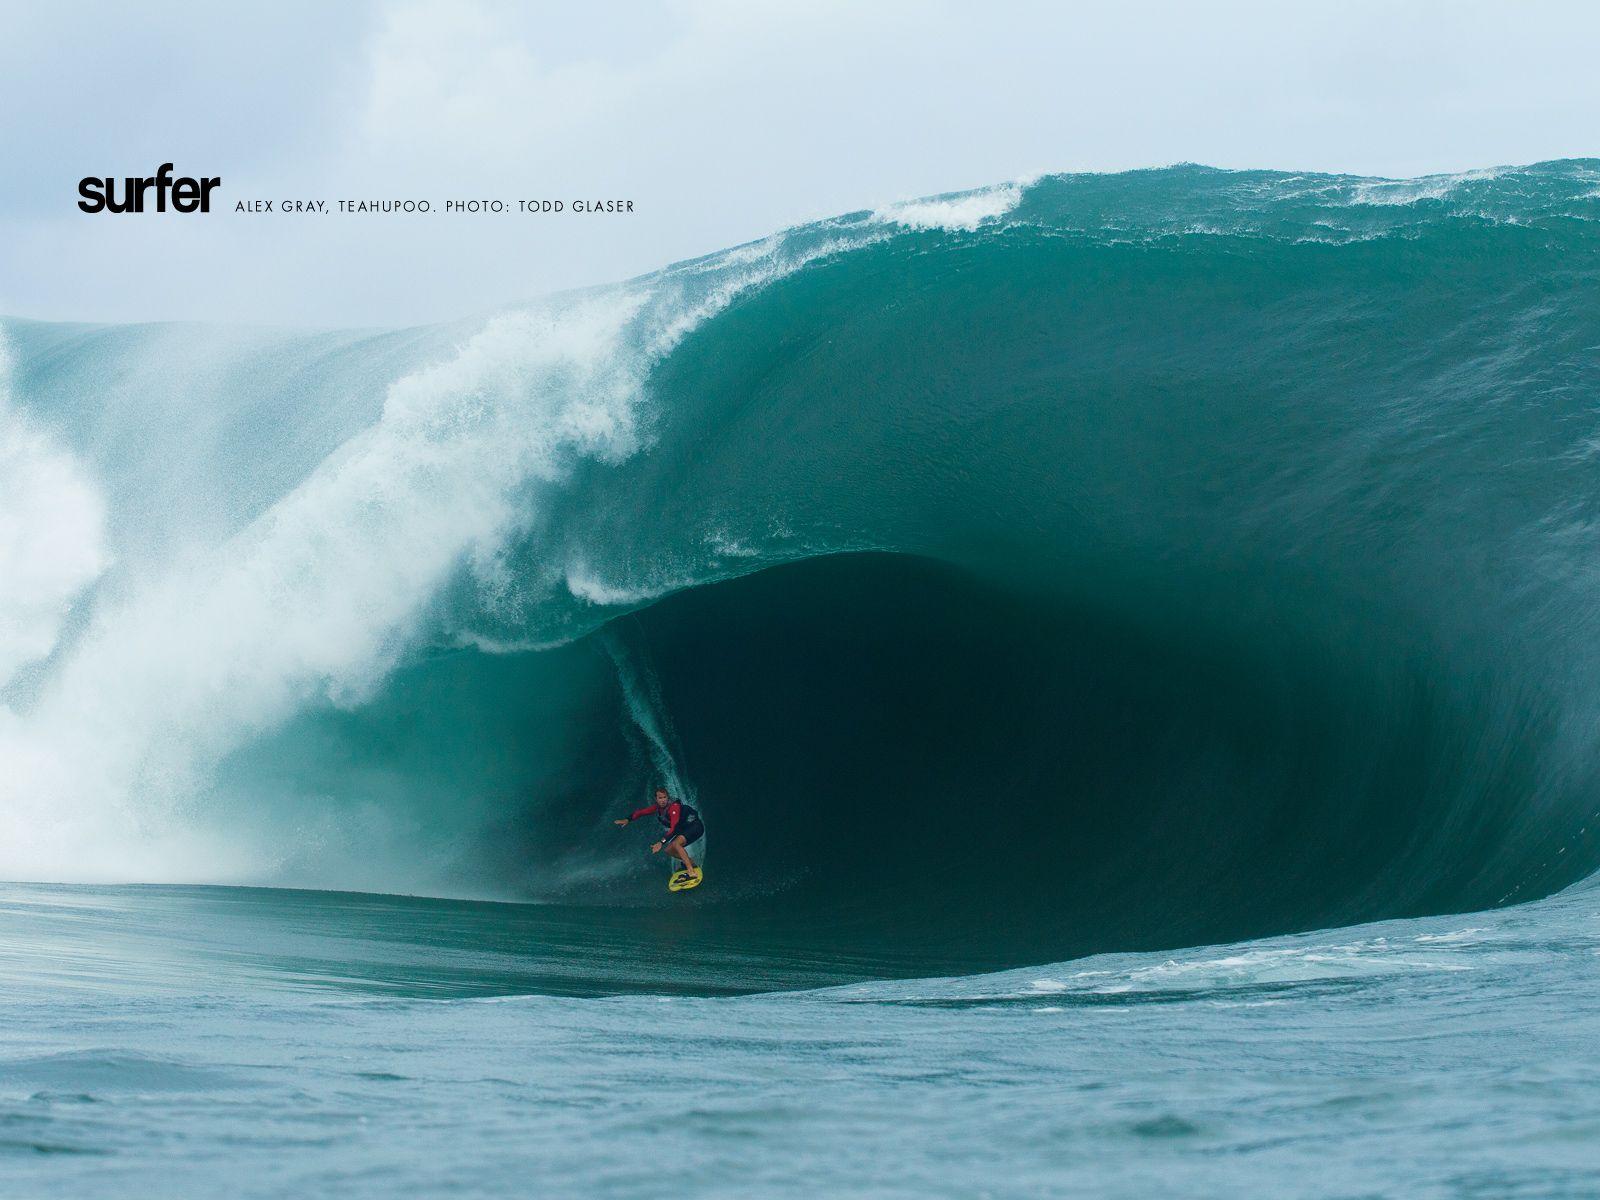 Wallpaper. Surf, Tahiti and Surfer magazine